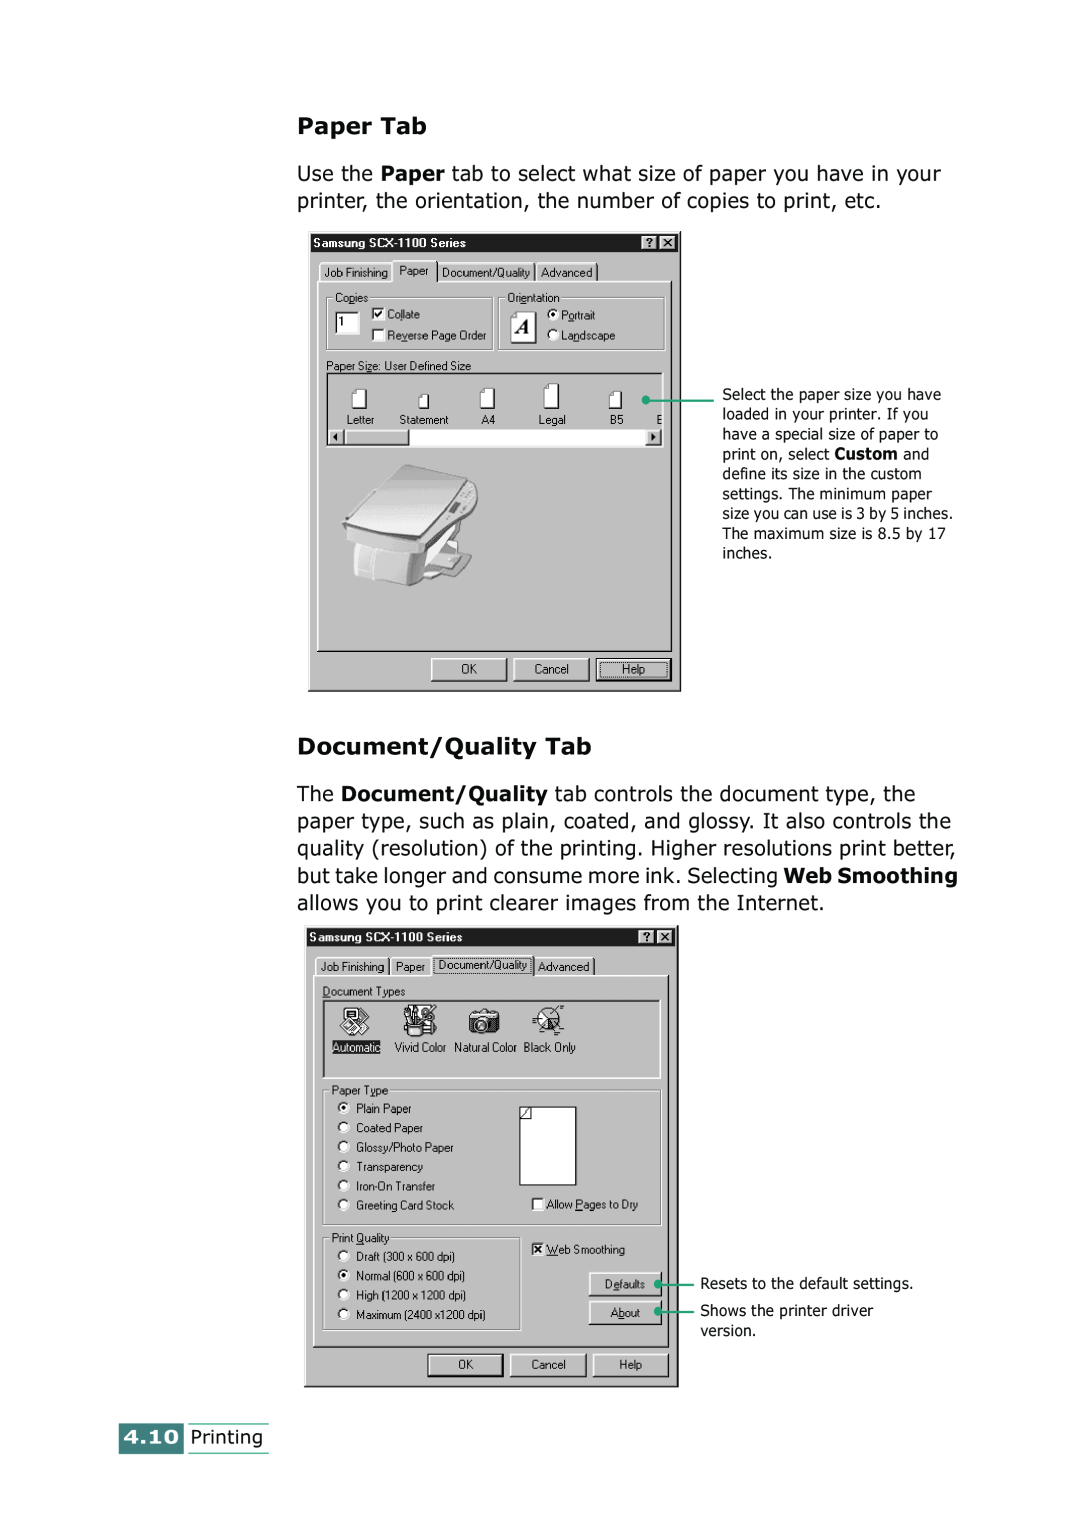 Samsung SCX-1100 manual Paper Tab, Document/Quality Tab 